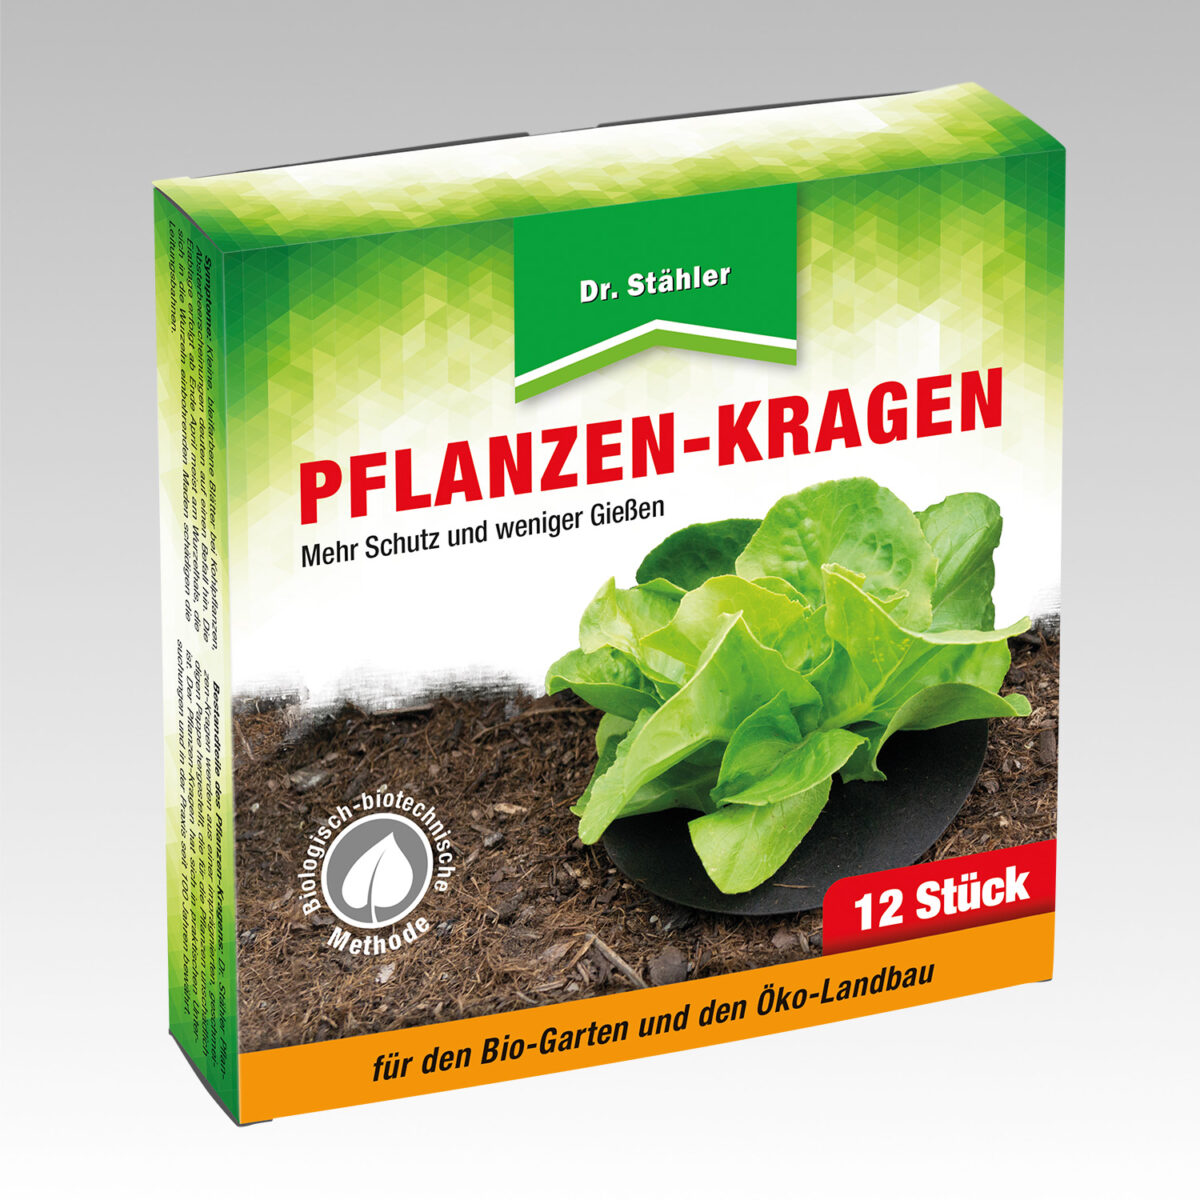 9520 Pflanzen Kragen mockup